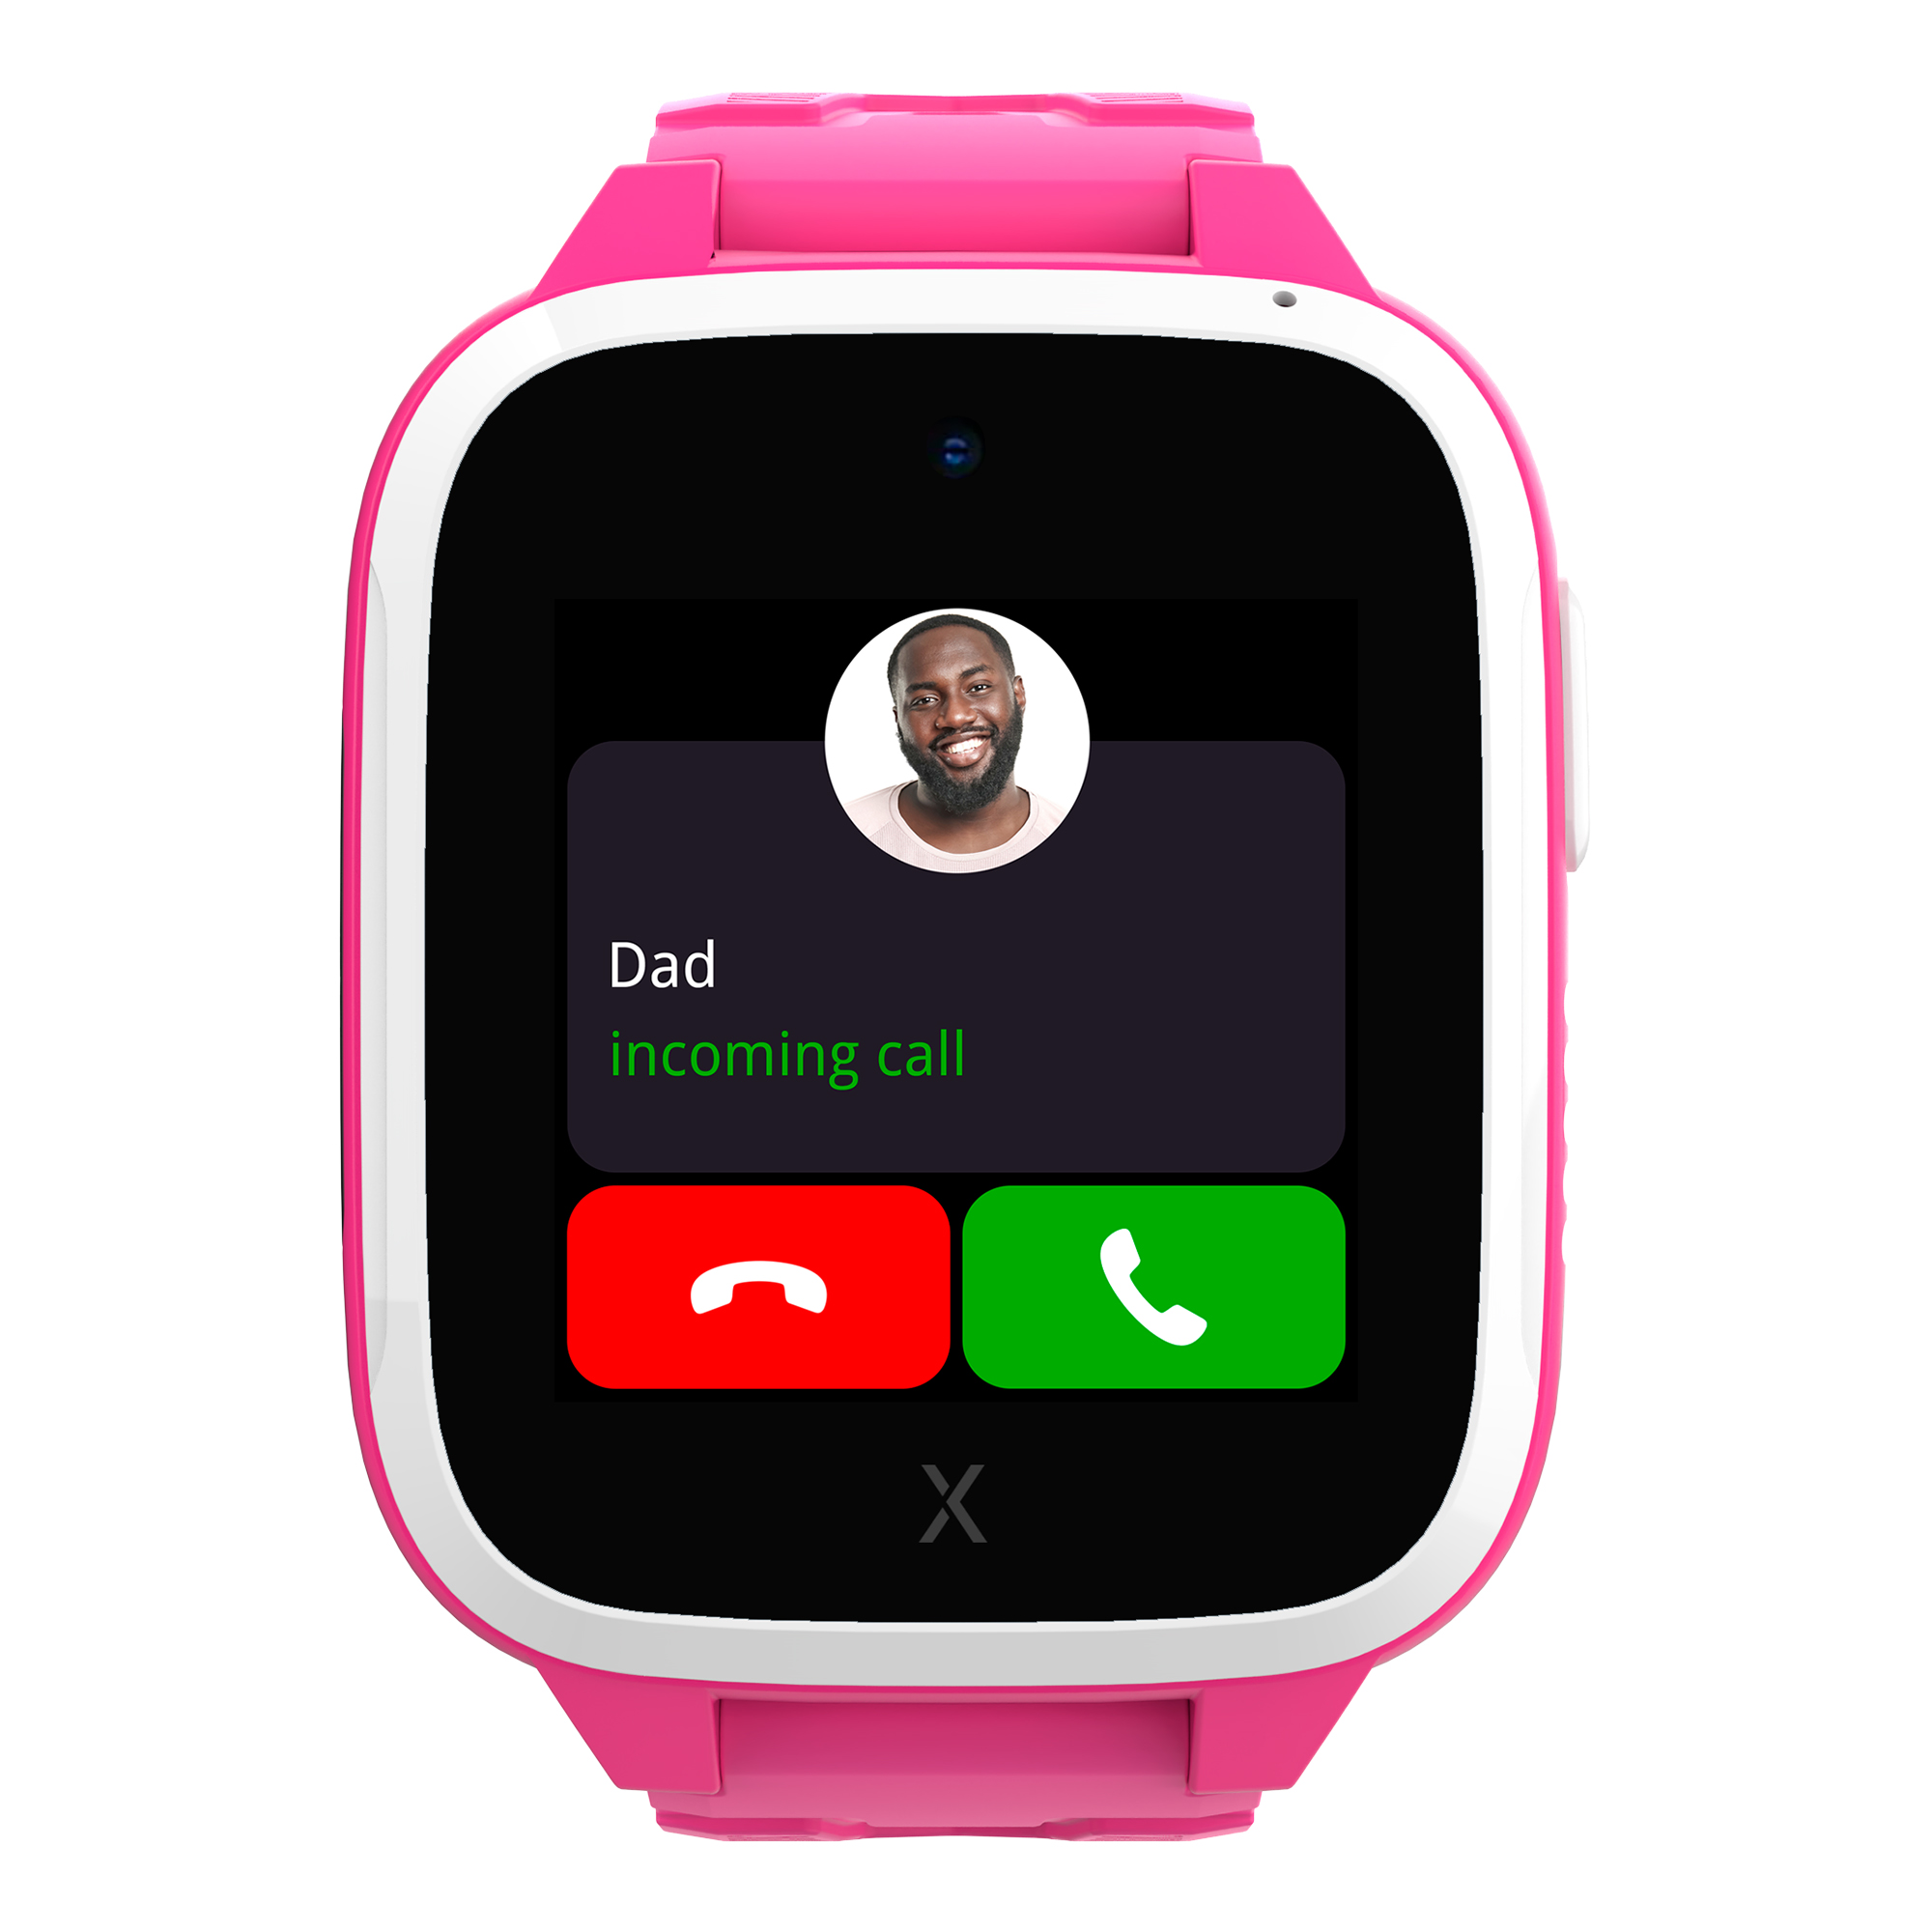 Xplora XGO3 Kids Smartwatch Cellphone Black